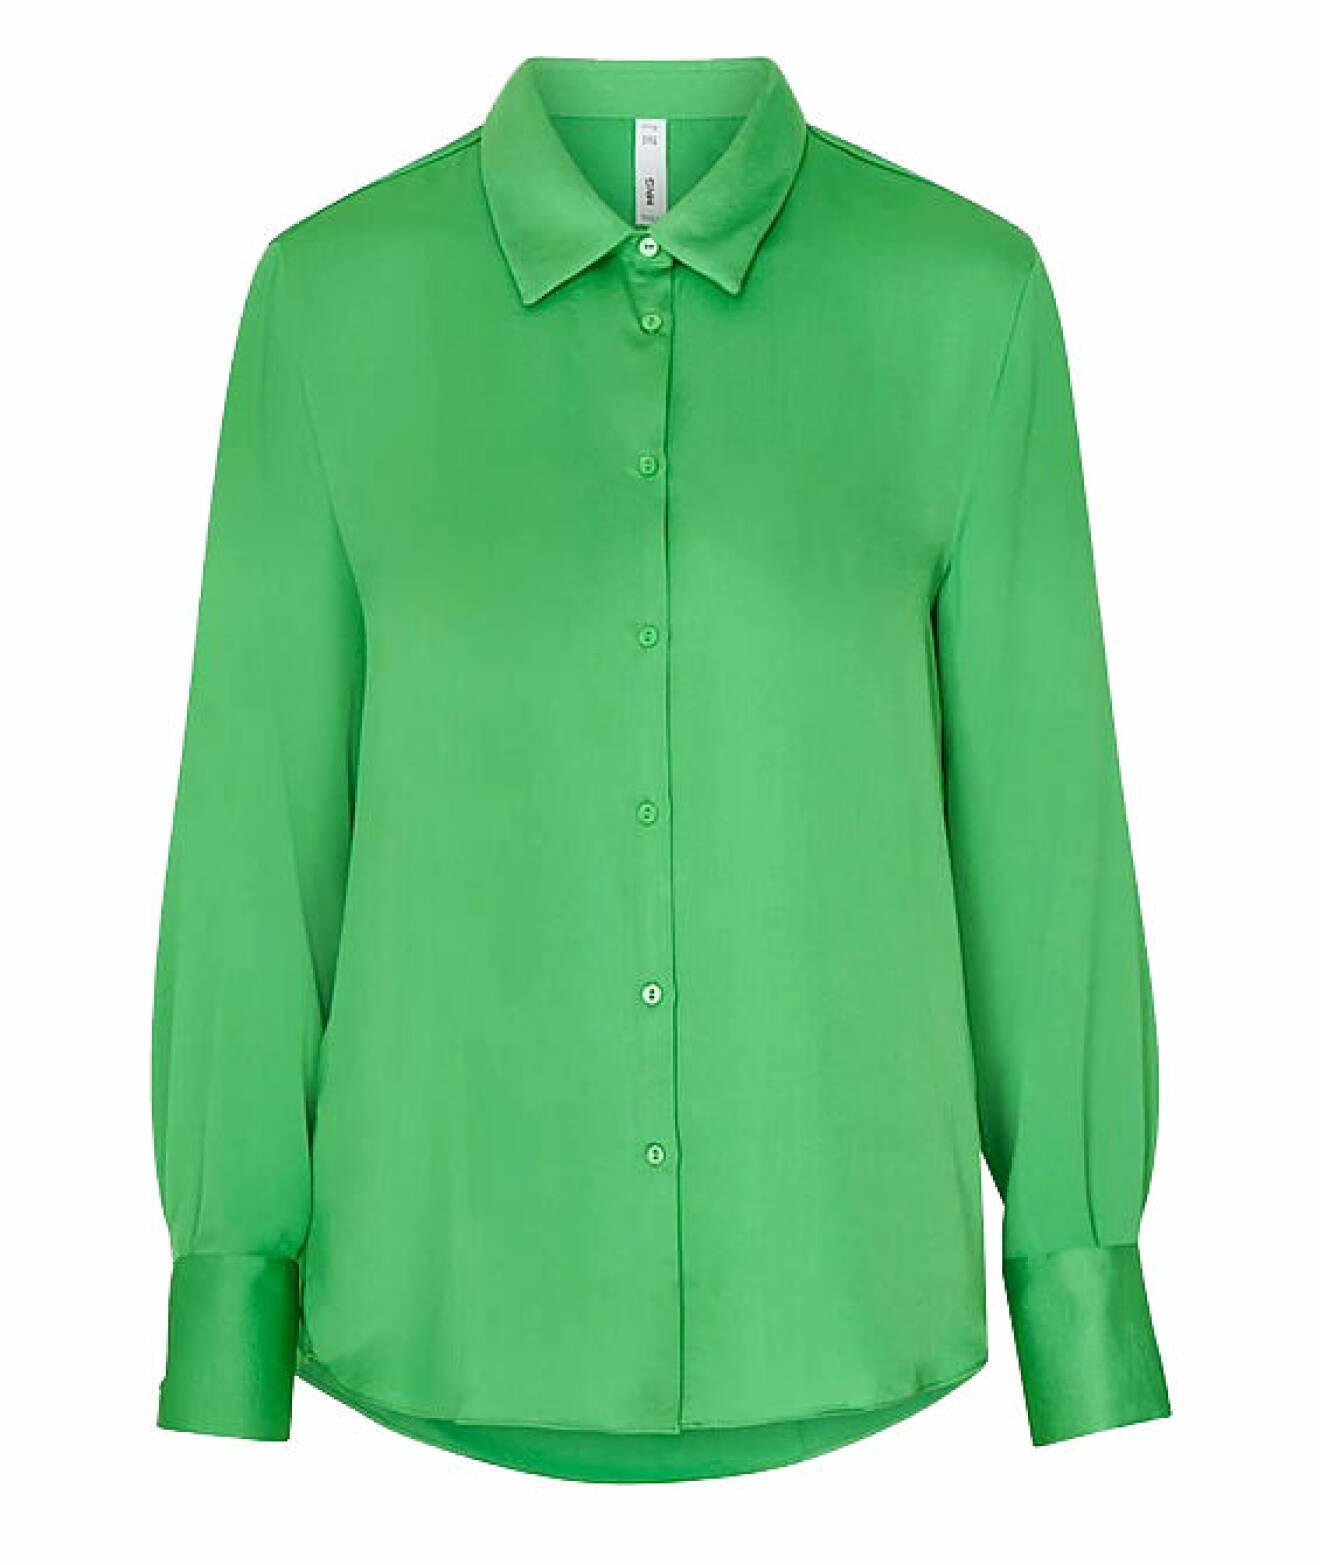 grön skjorta dam